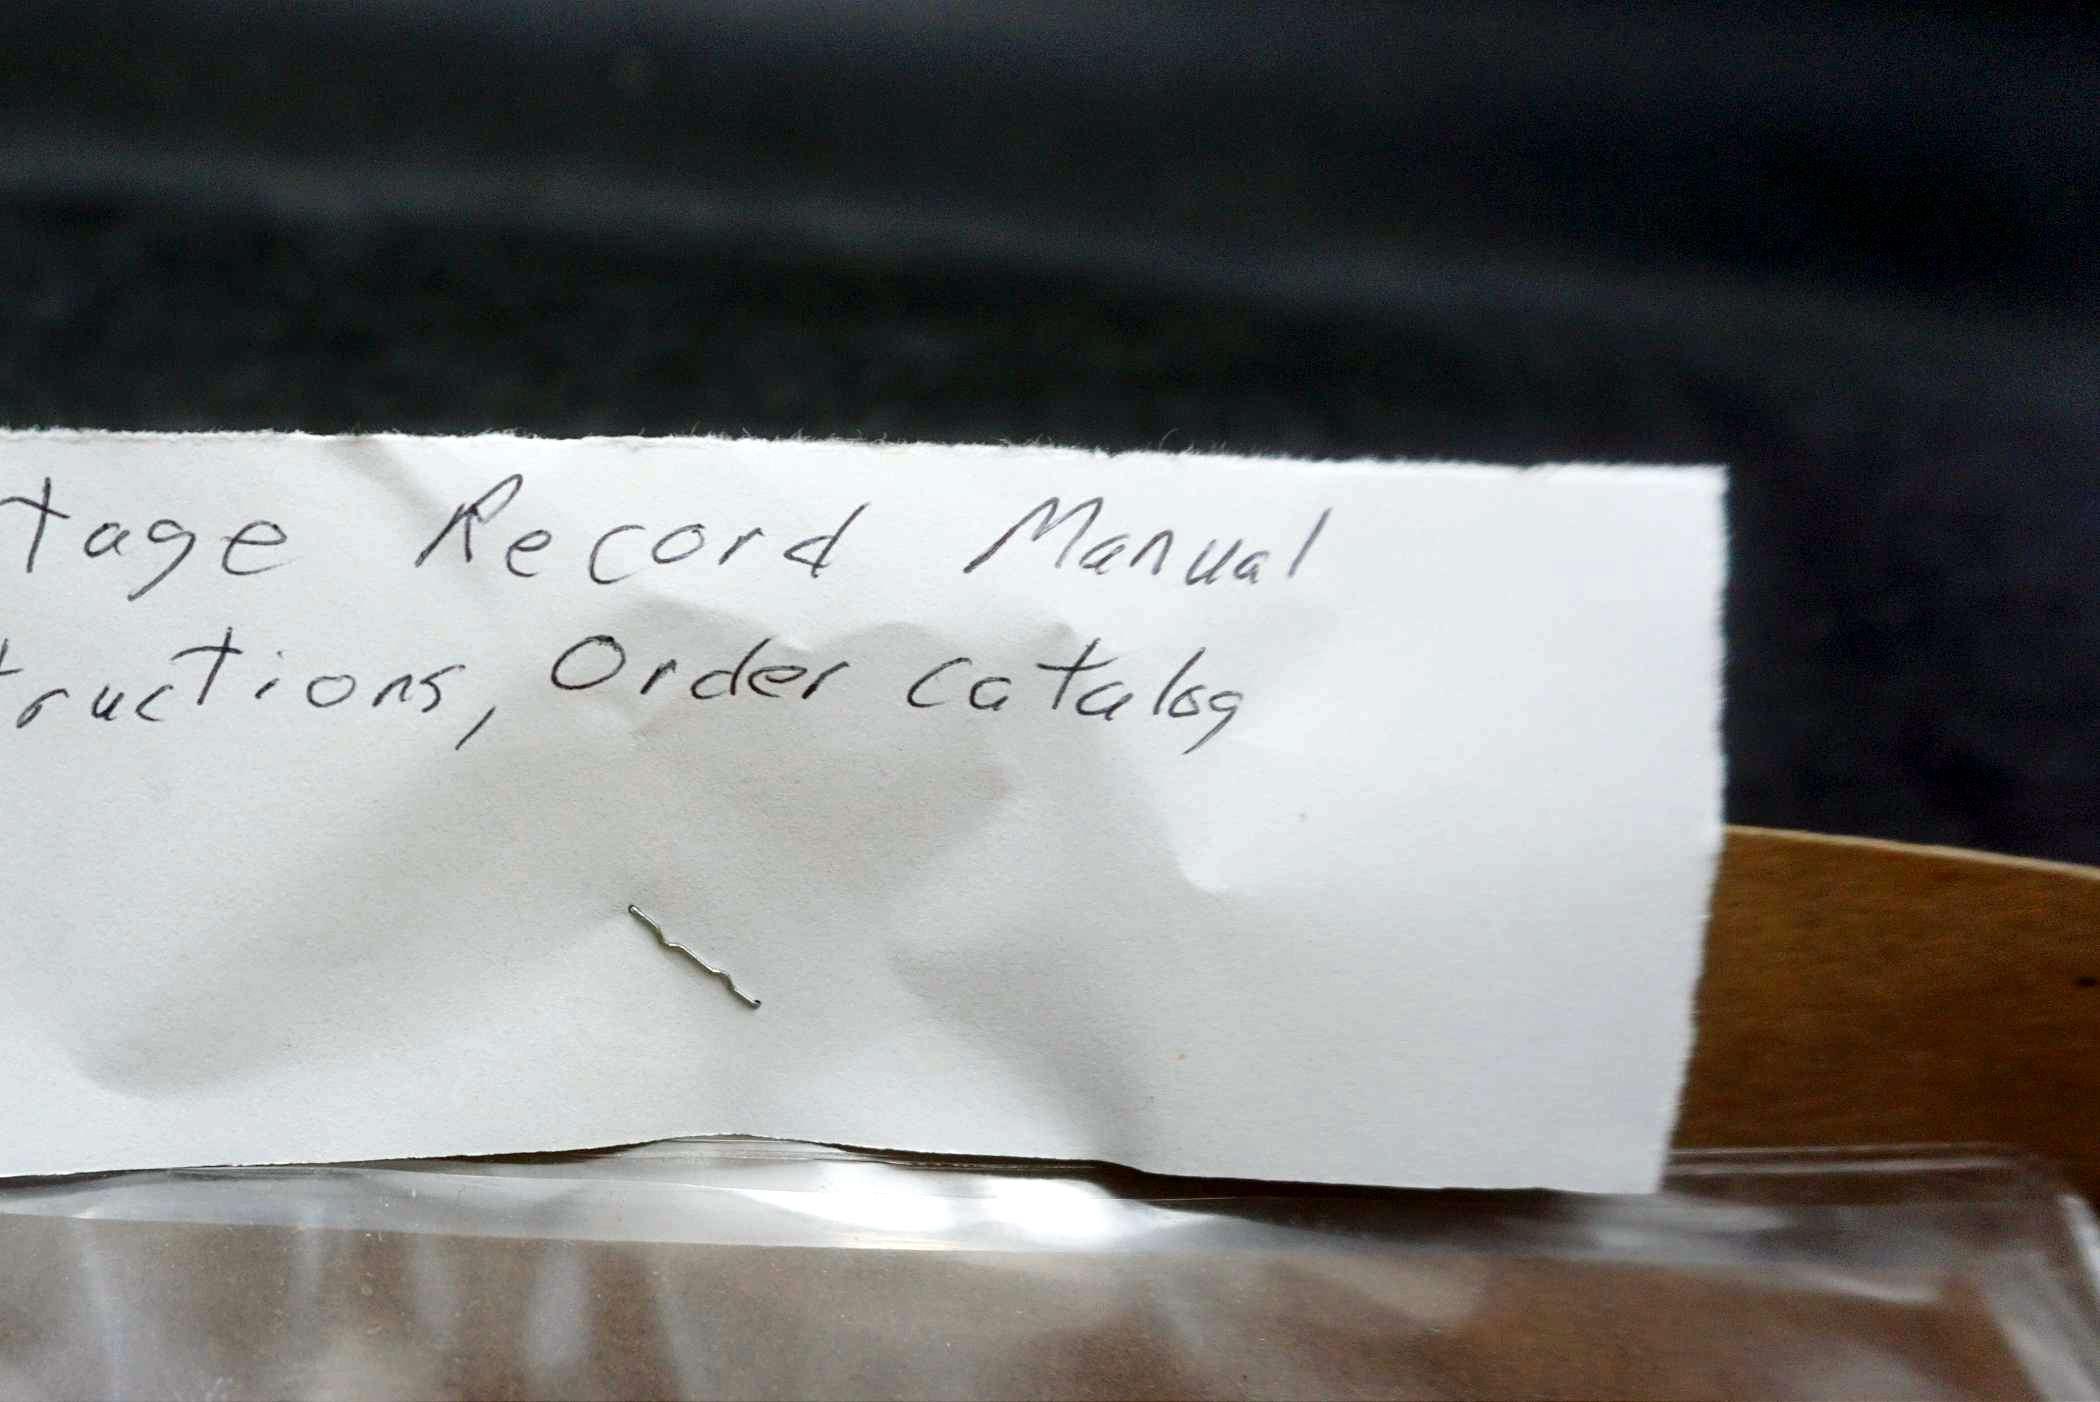 Vintage Record Manual Instructions, Order Catalog